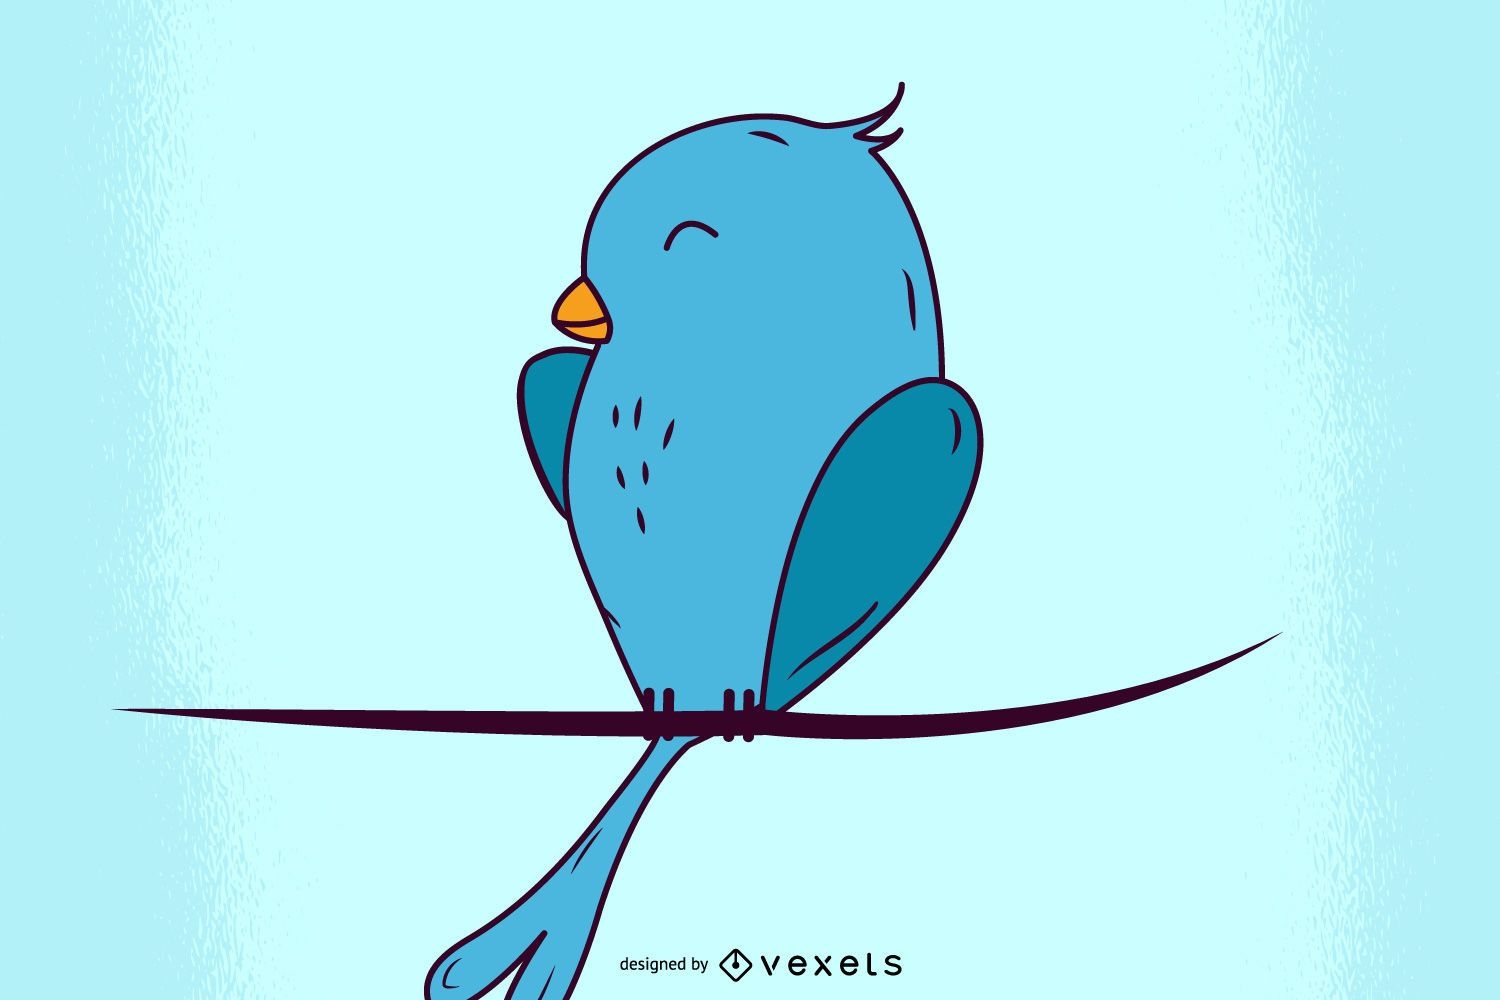 25 Easy & Cute Bird Drawing Ideas | Bird drawings, Simple bird drawing, Easy  bird